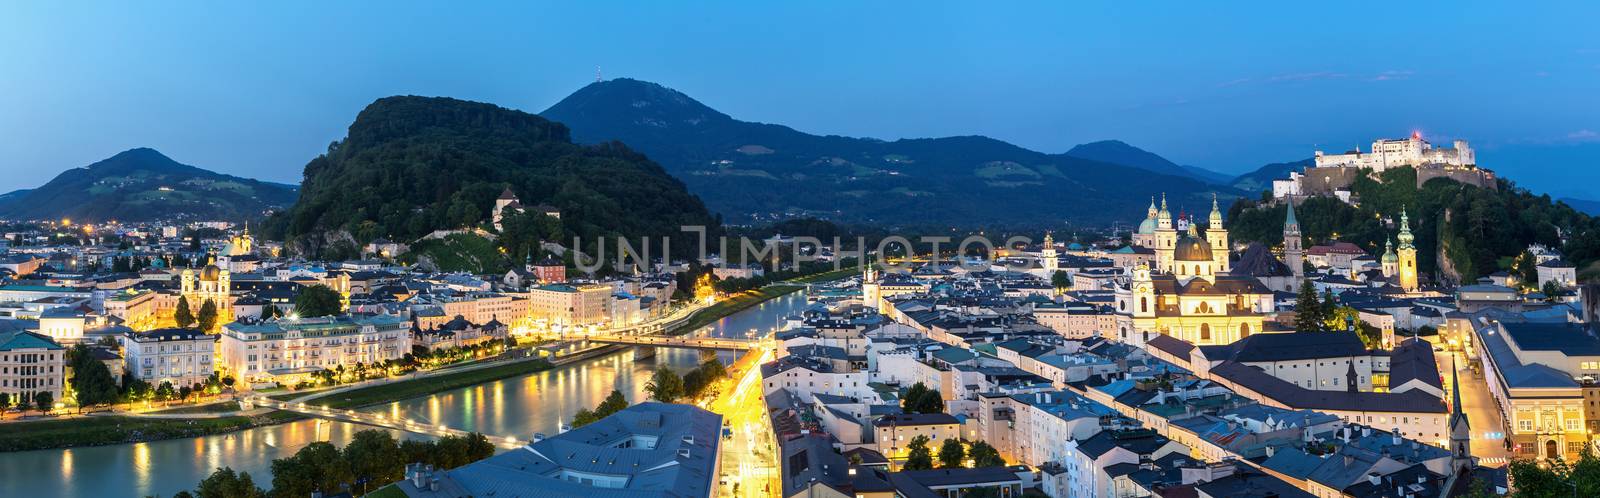 Panorama Beautiful view of the historic city of Salzburger Land, Austria at dusk